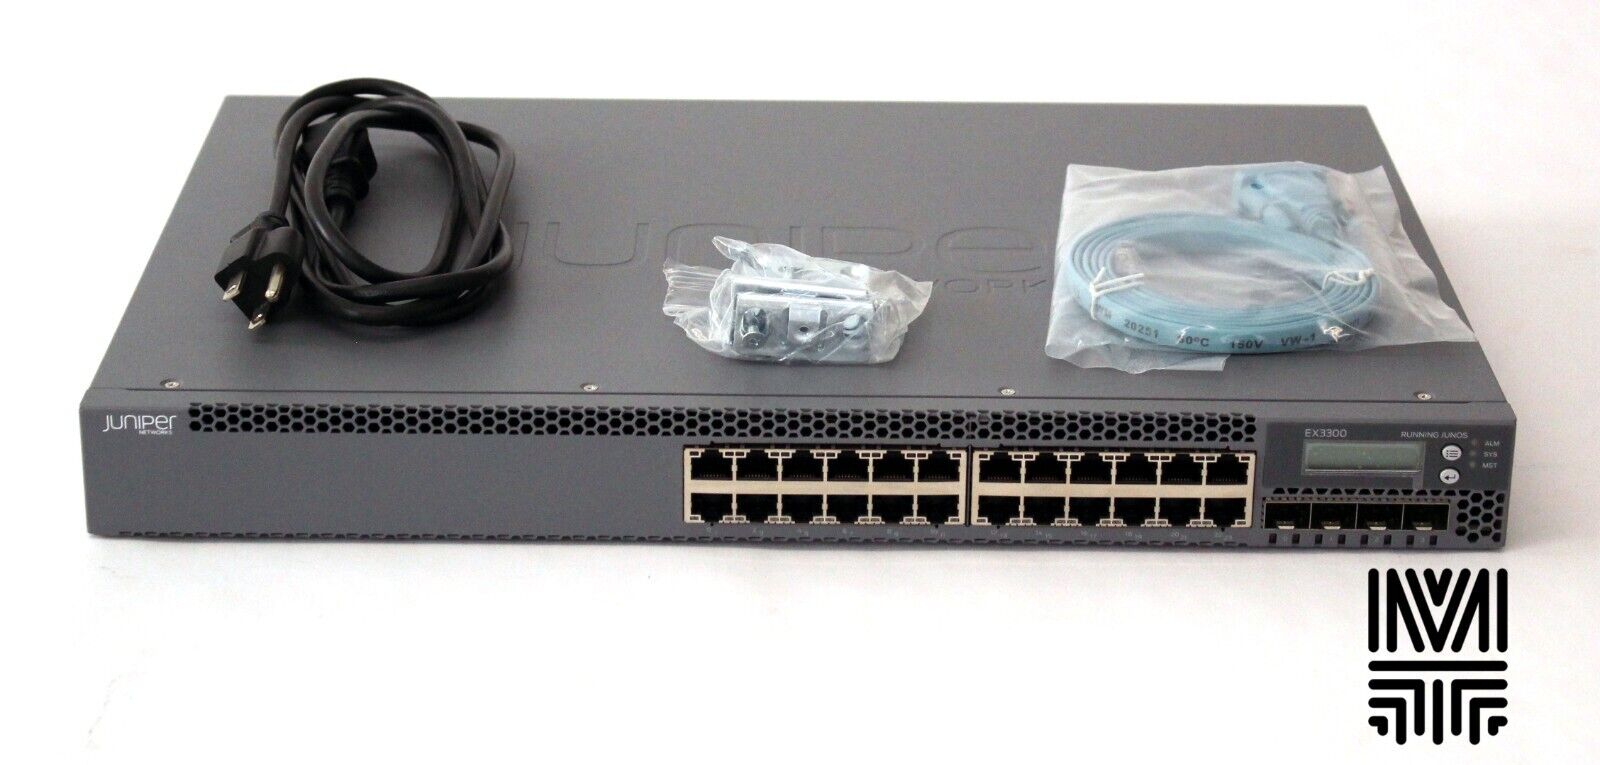 Juniper EX3300-24T EX3300 Series 24-Port 10/100/1000BASE-T with 4 SFP+ Ethernet